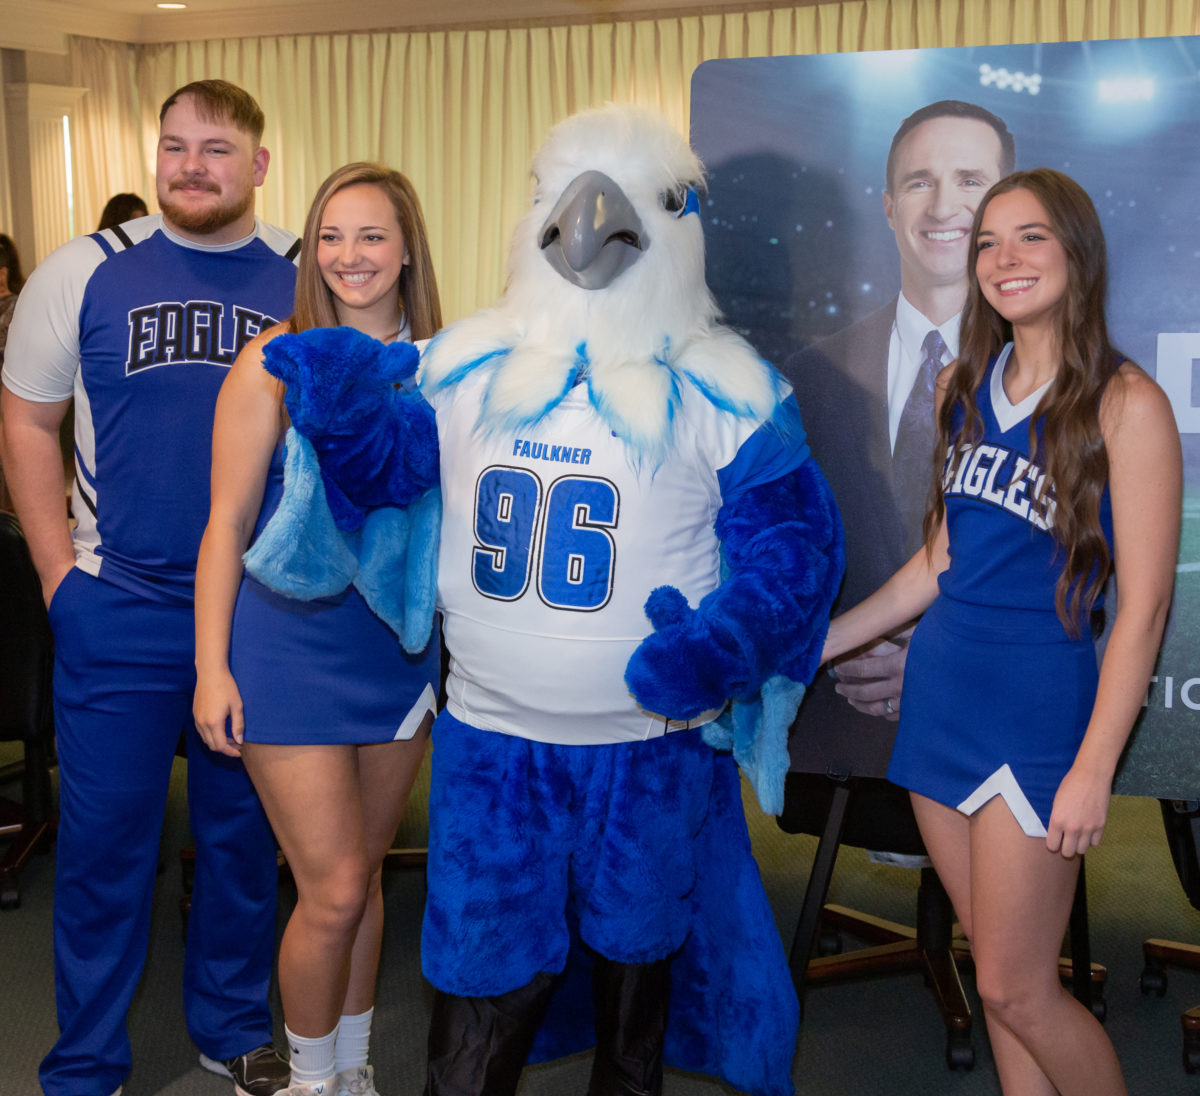 Members of the Faulkner University Cheer team pose with mascot Royal.